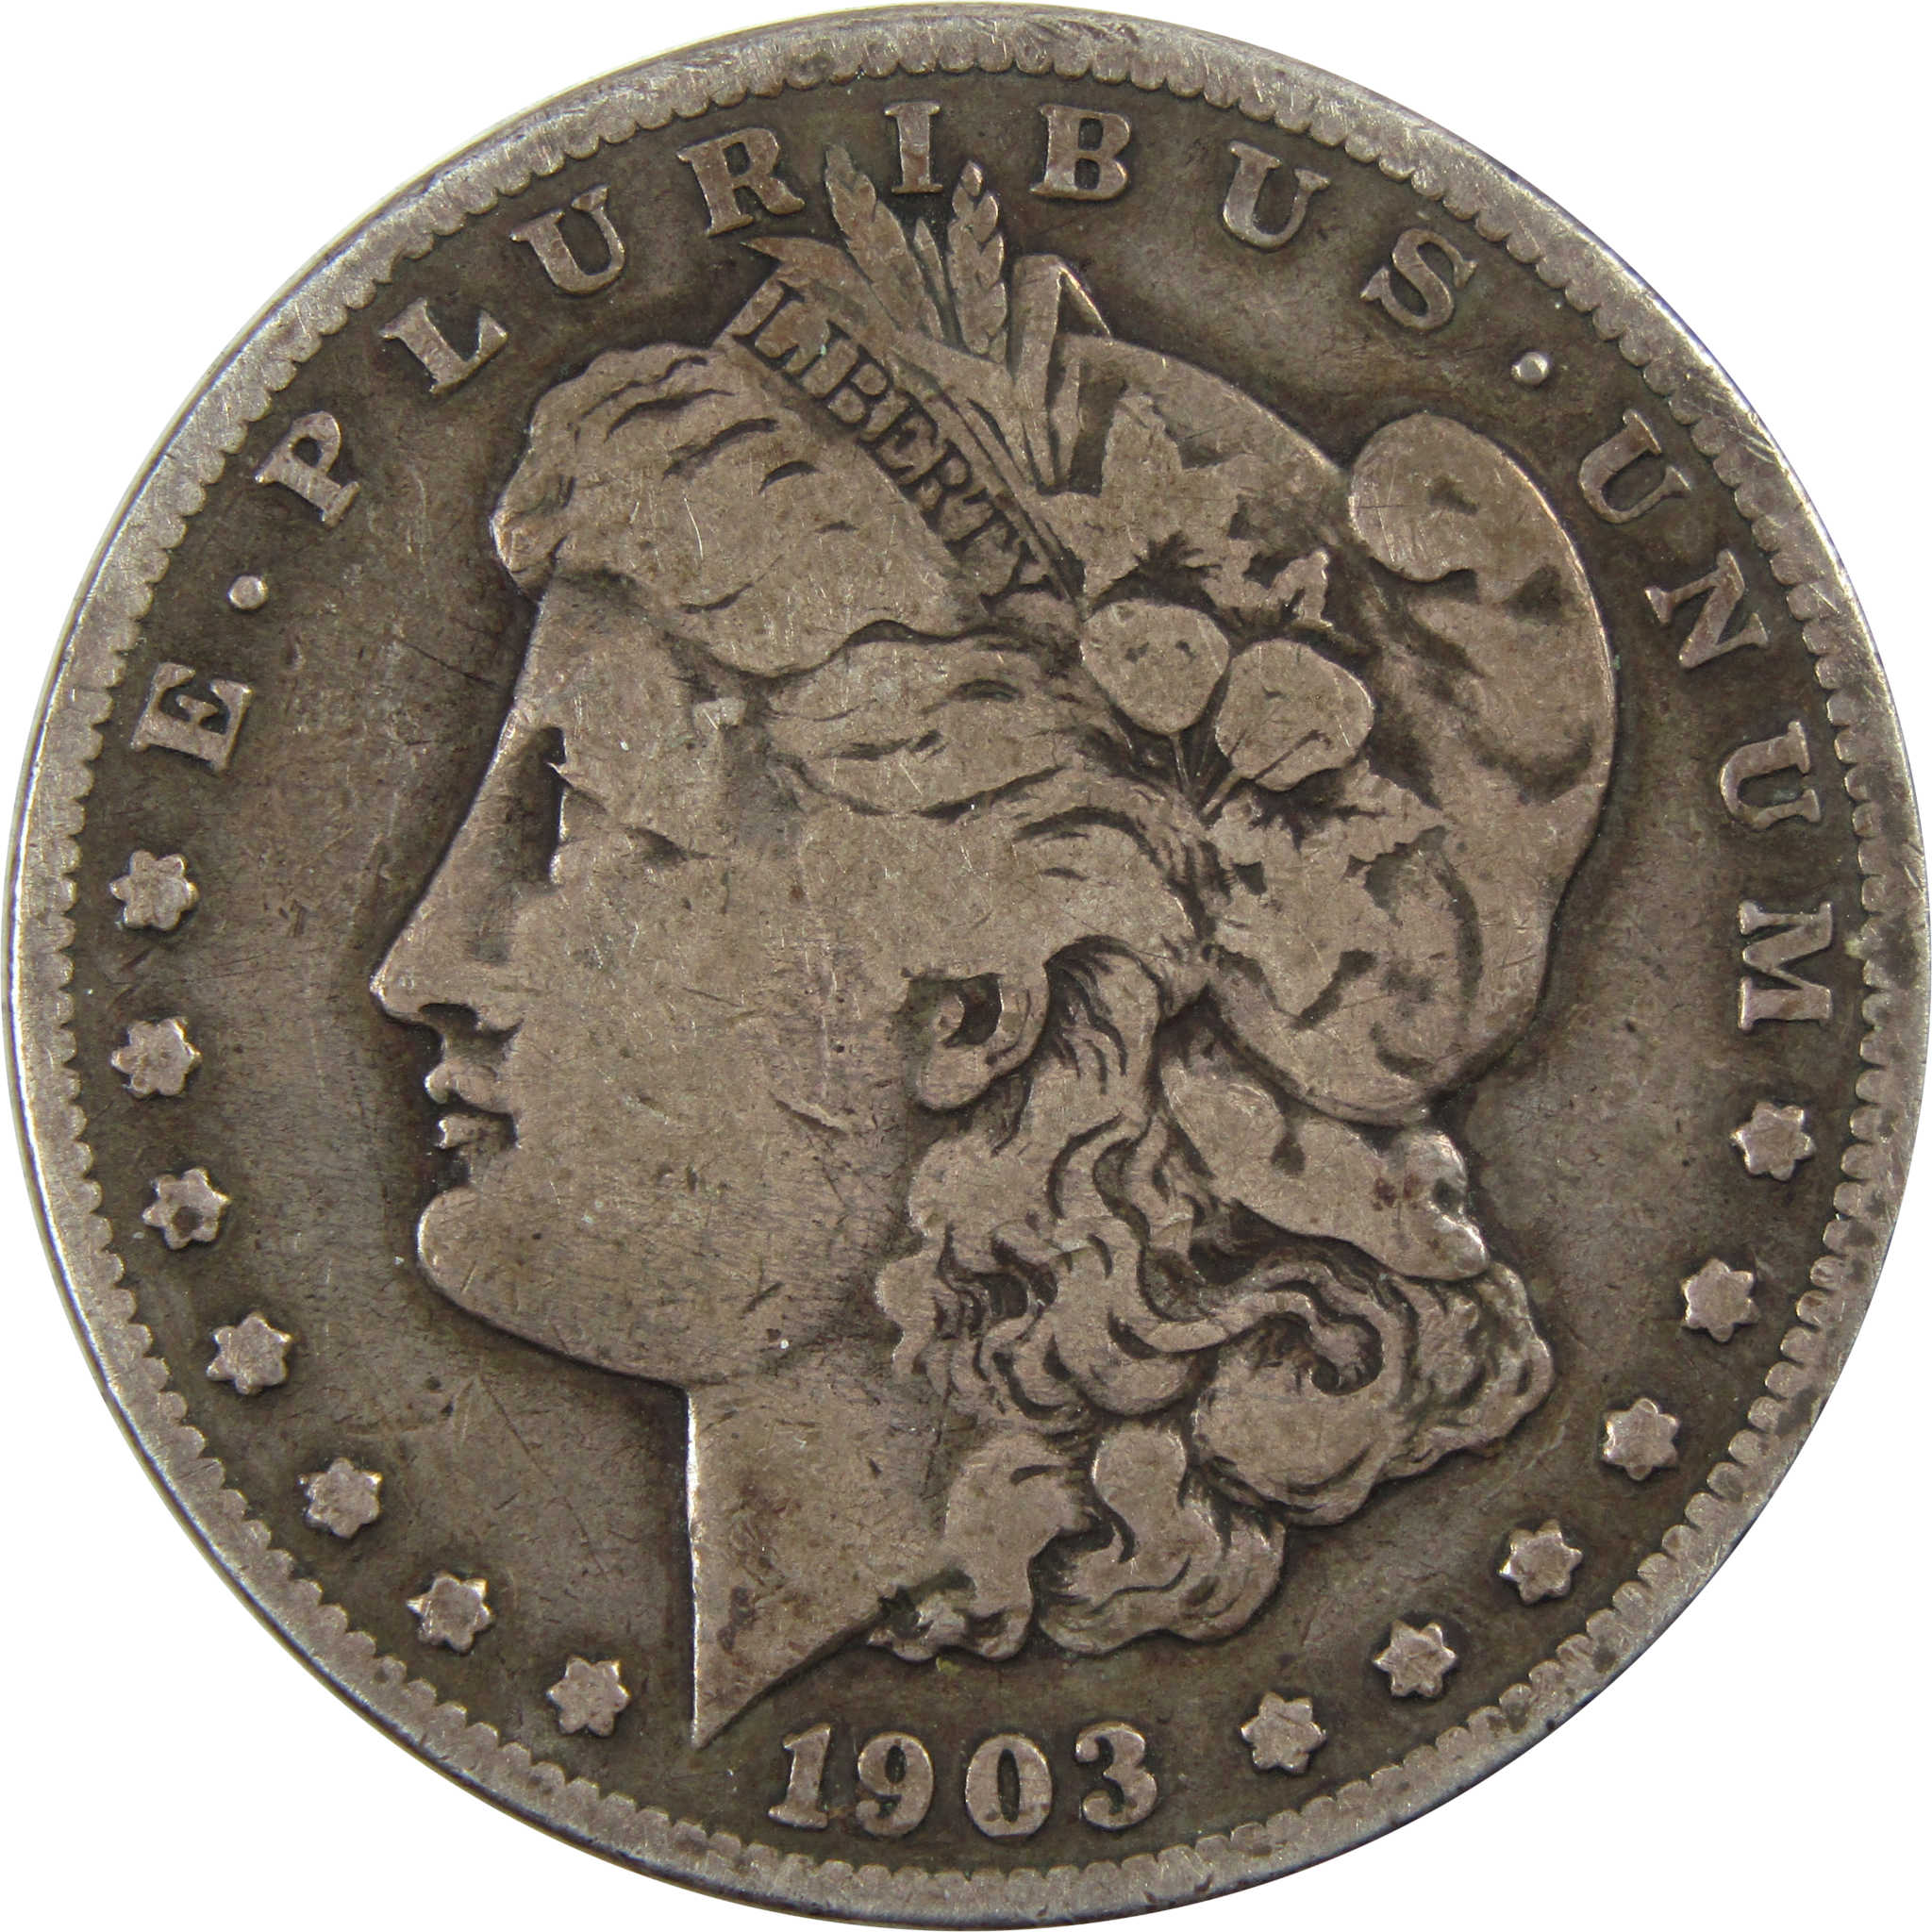 1903 S Morgan Dollar F Fine 90% Silver $1 Coin SKU:I4948 - Morgan coin - Morgan silver dollar - Morgan silver dollar for sale - Profile Coins &amp; Collectibles